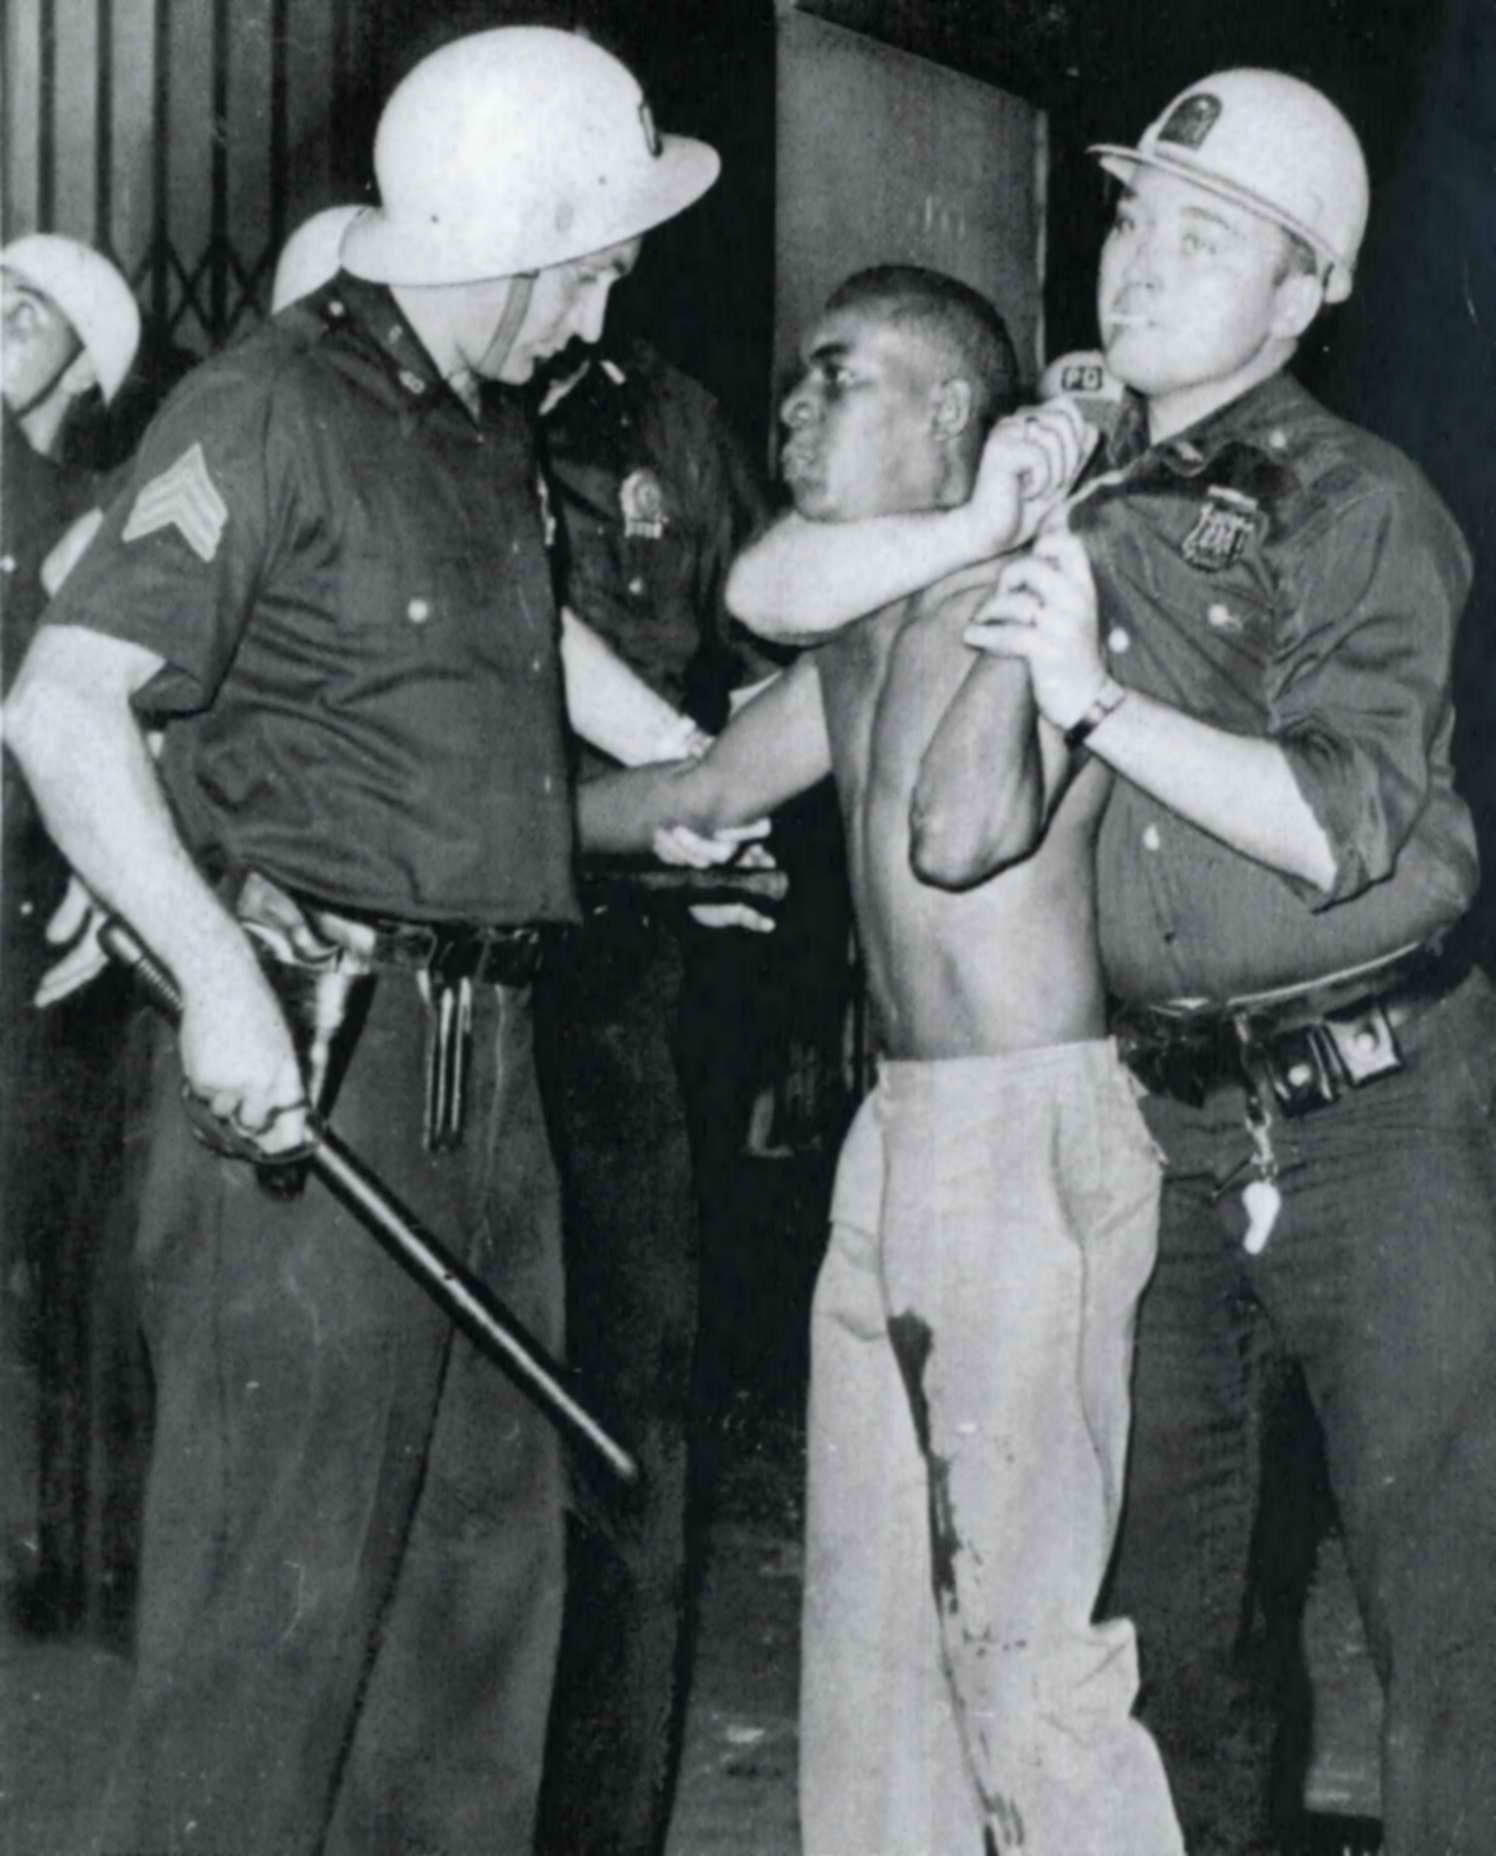 Police restrain prisoner Harlem riot 1964